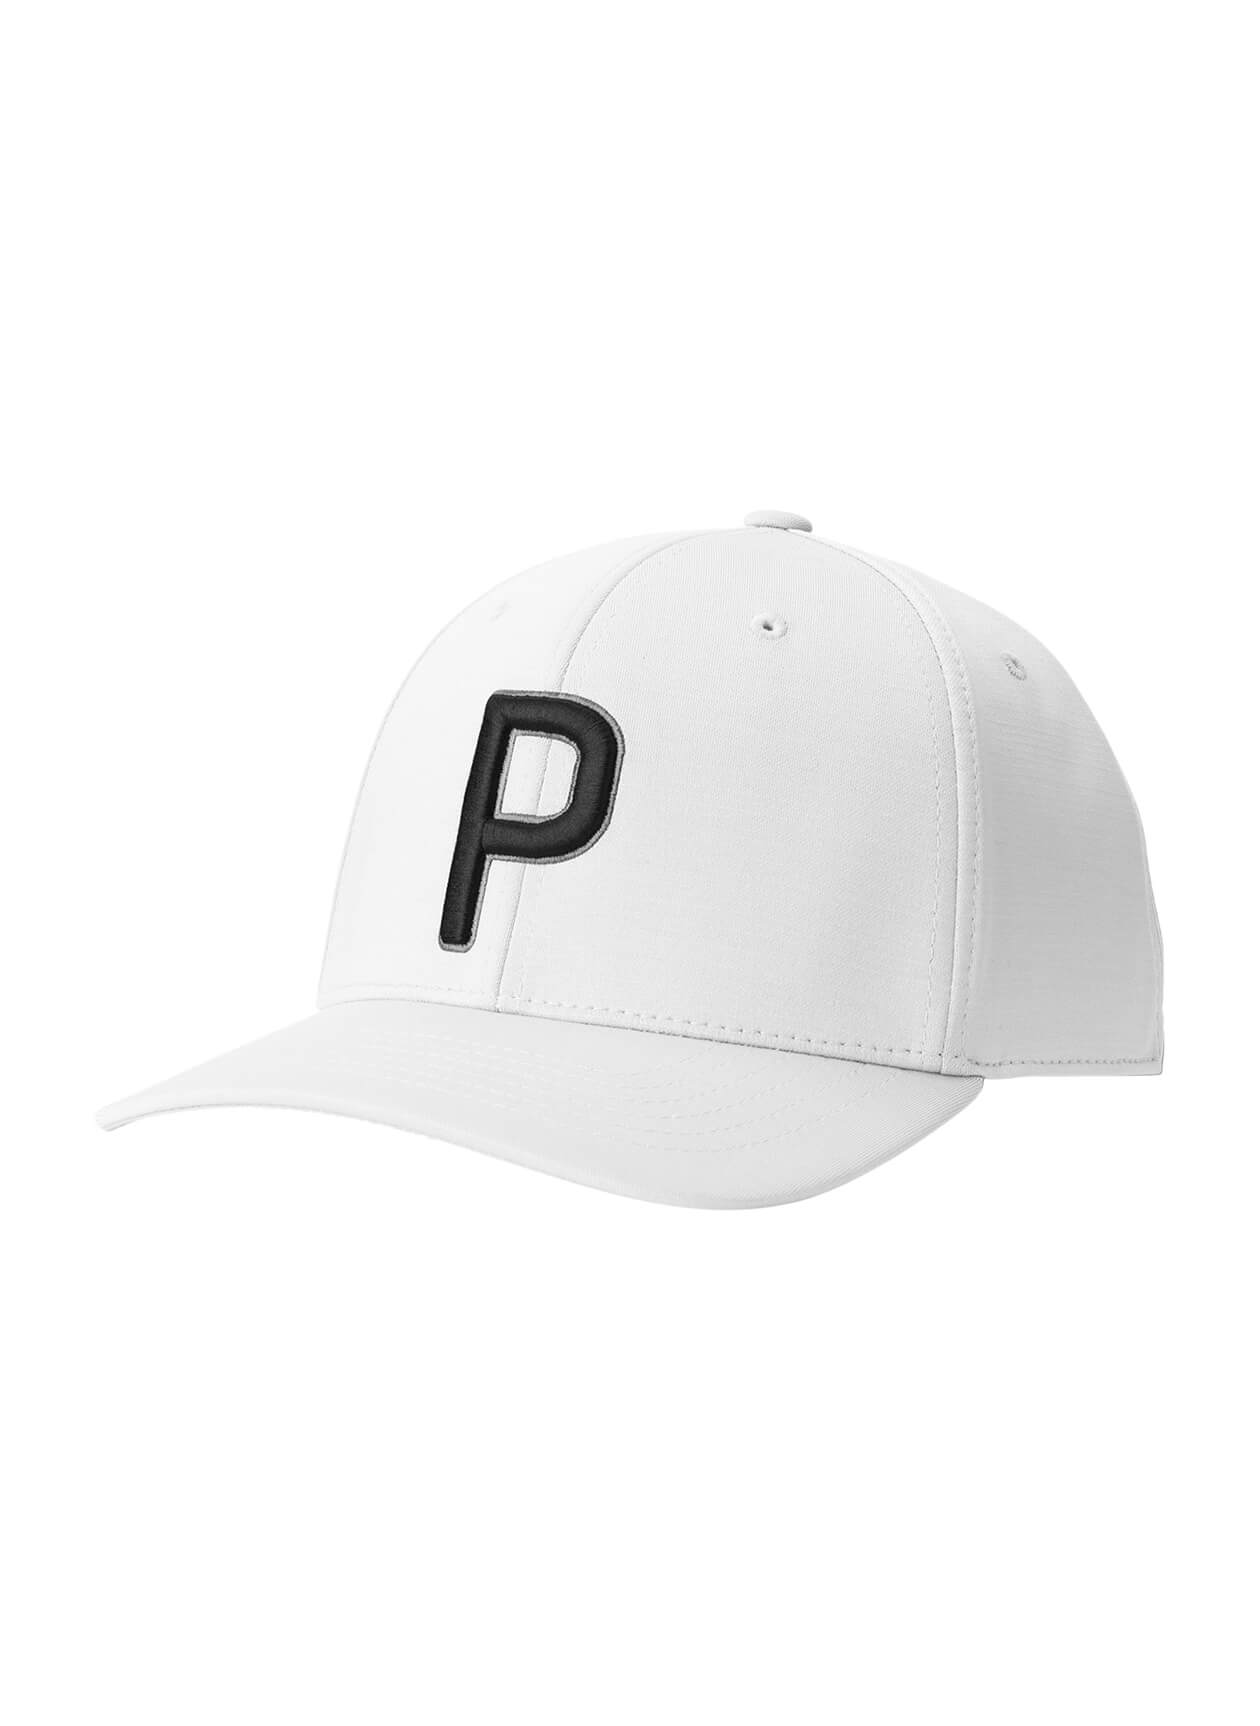 PUMA Bright White P Snapback Golf Cap